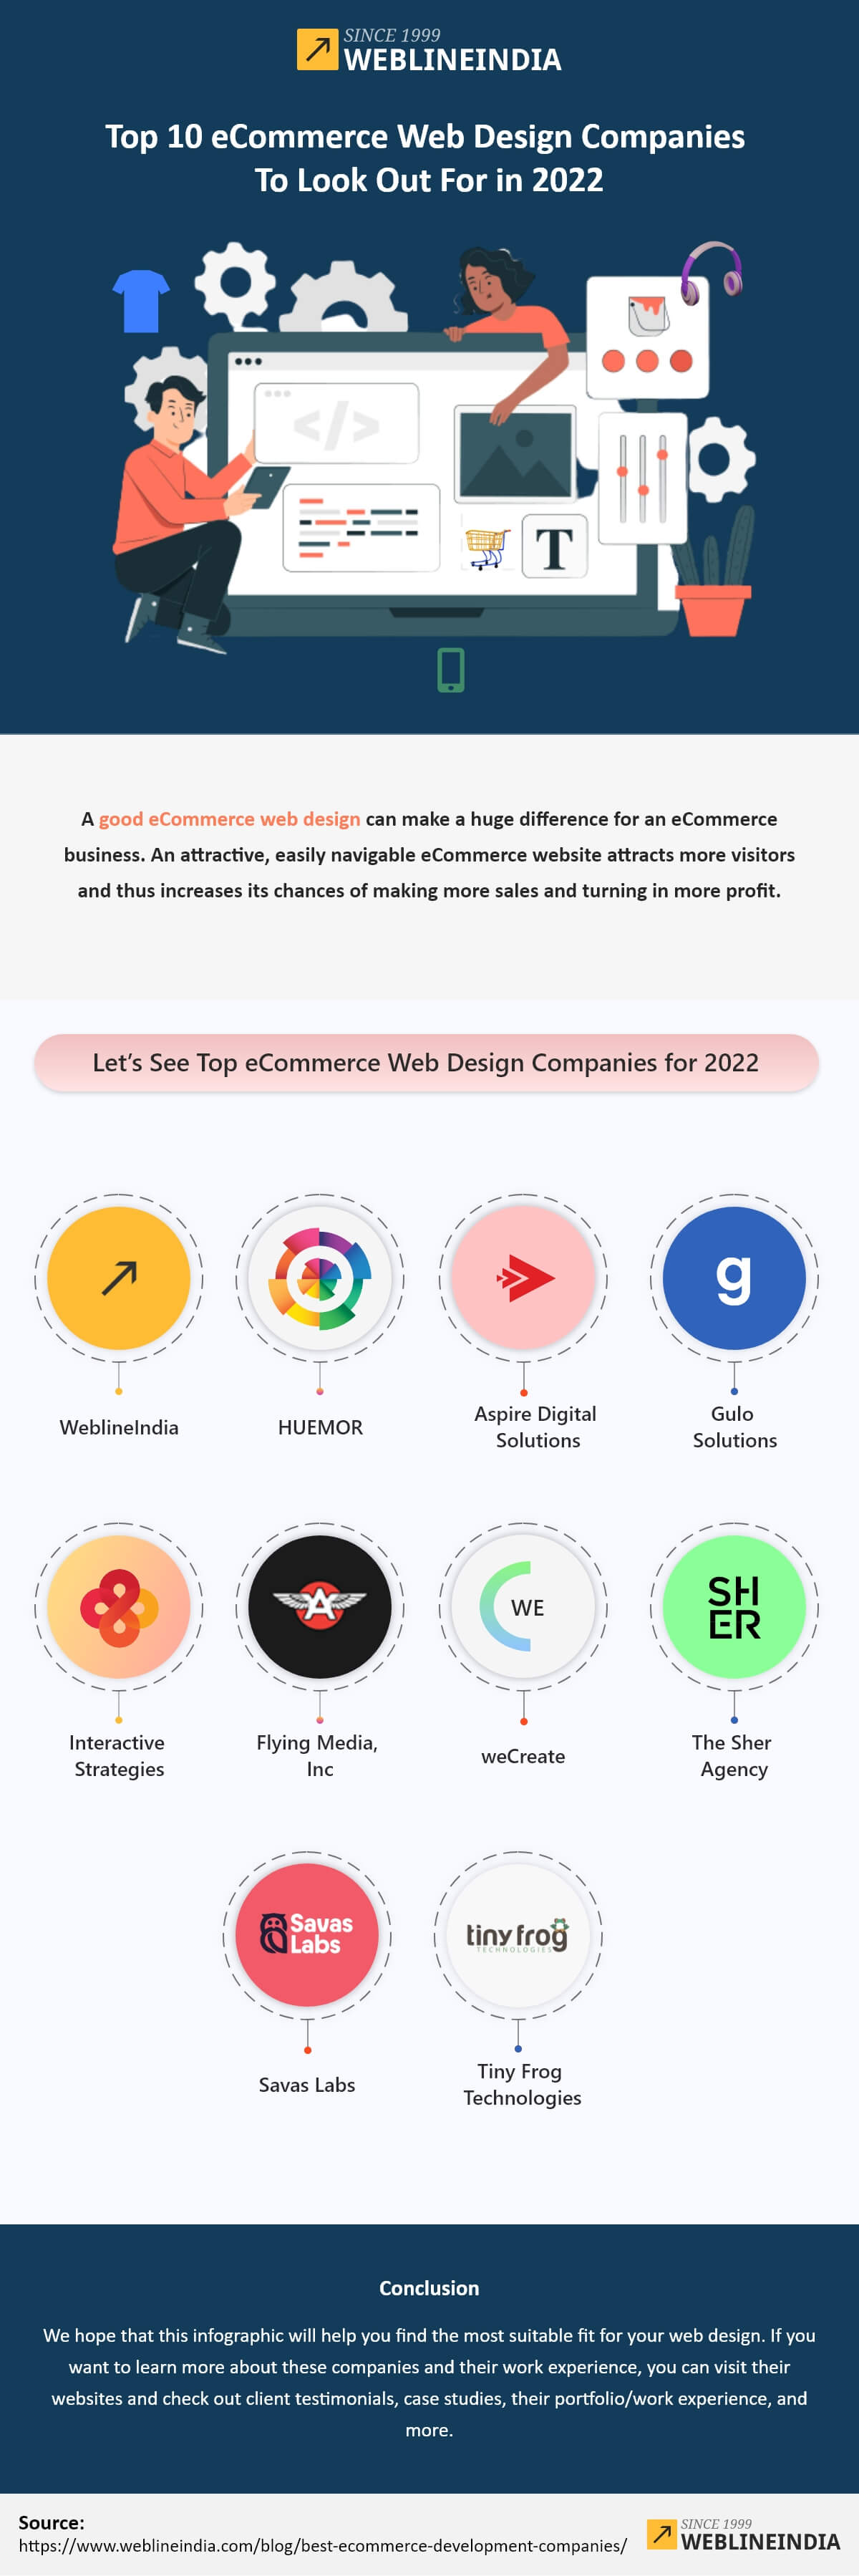 Top 10 eCommerce Web Design Companies - Infographic